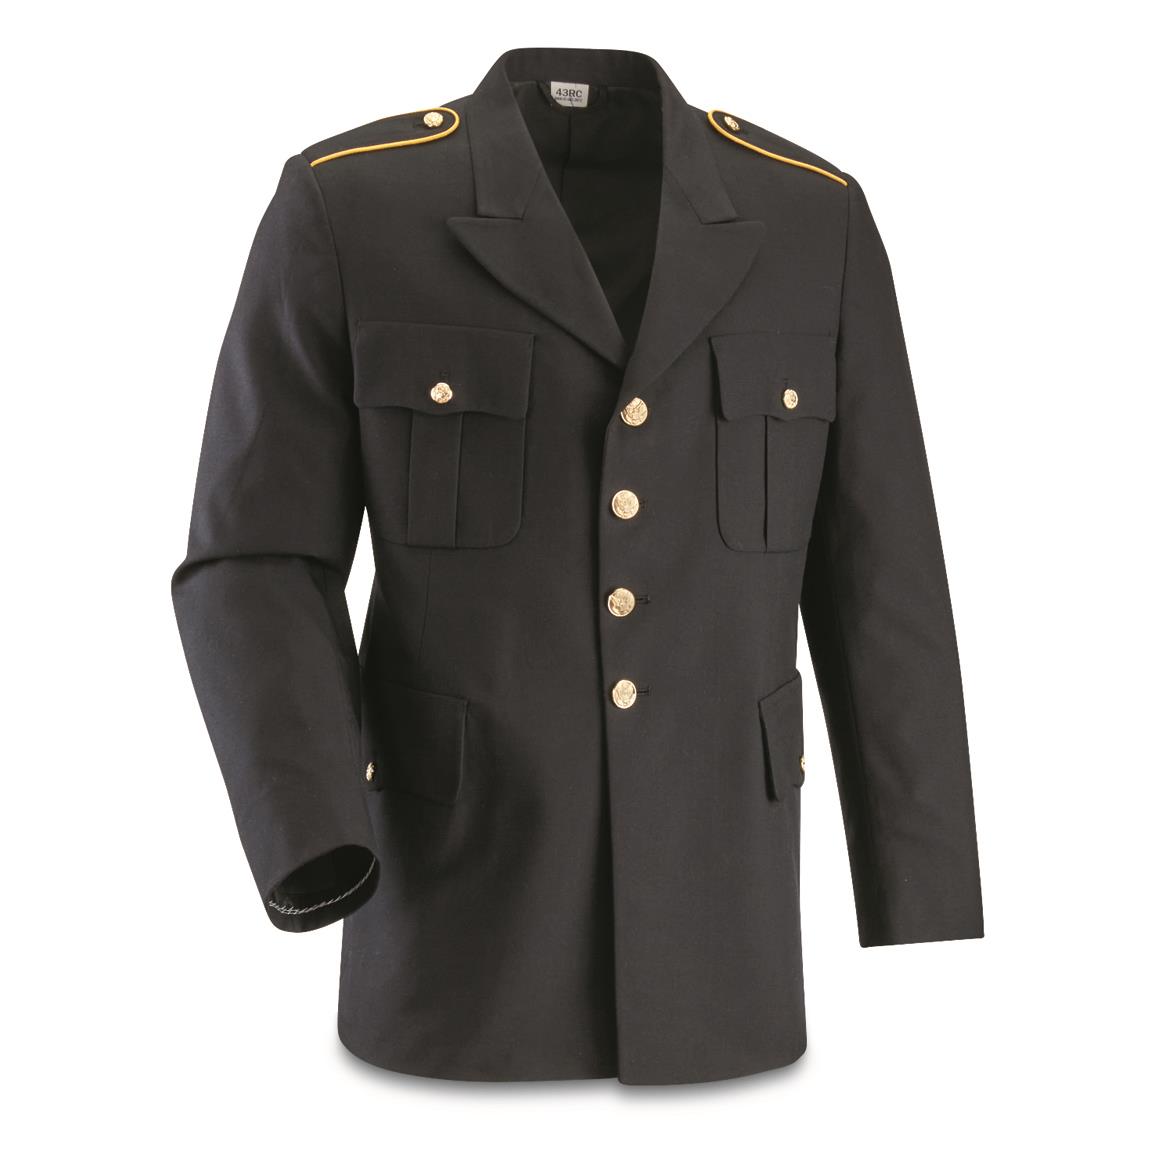 U.S. Army Surplus ASU Blue Dress Jacket, New, Black